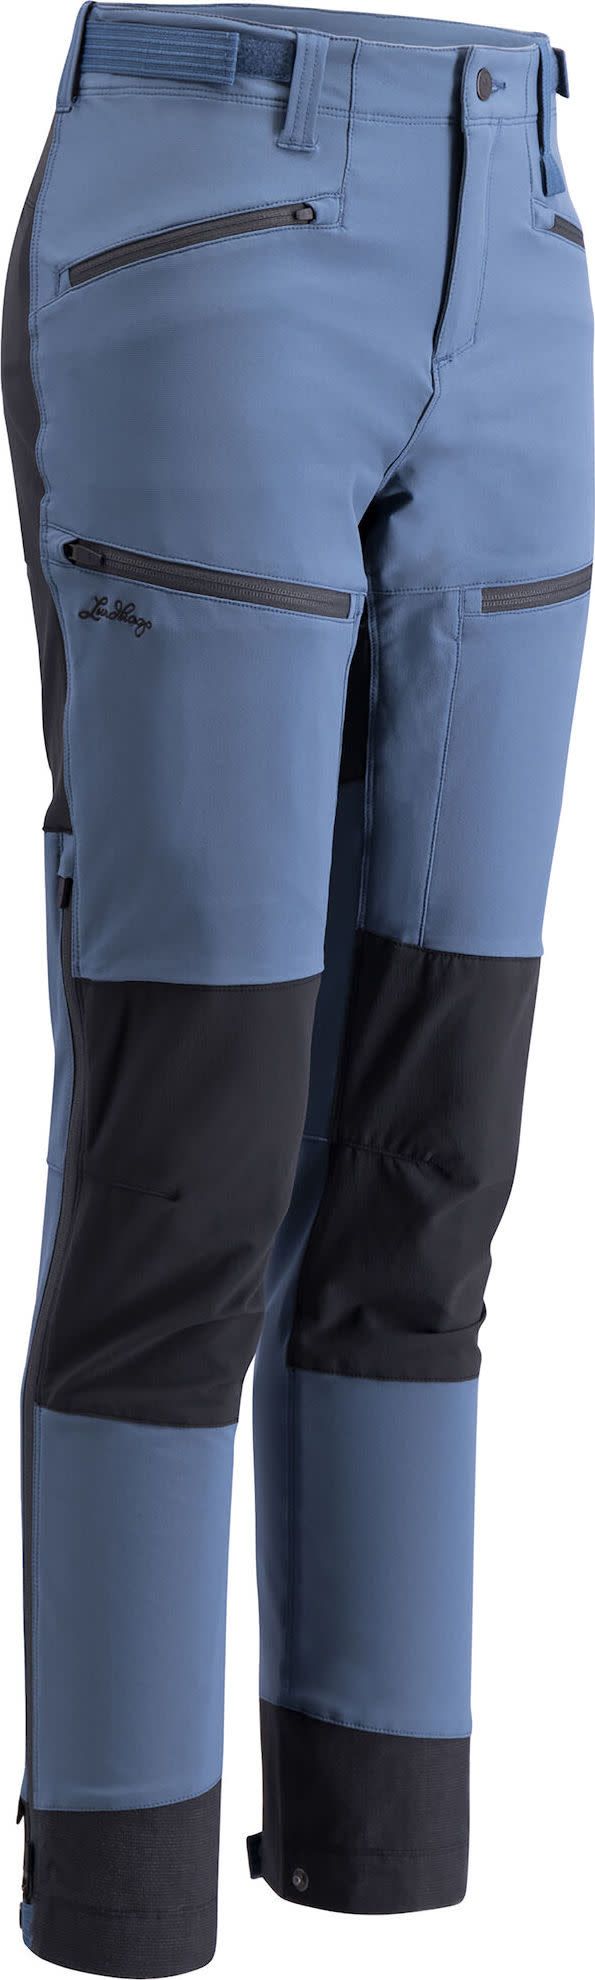 Lundhags Women's Padje Stretch Pant Denim Blue/Charcoal Lundhags